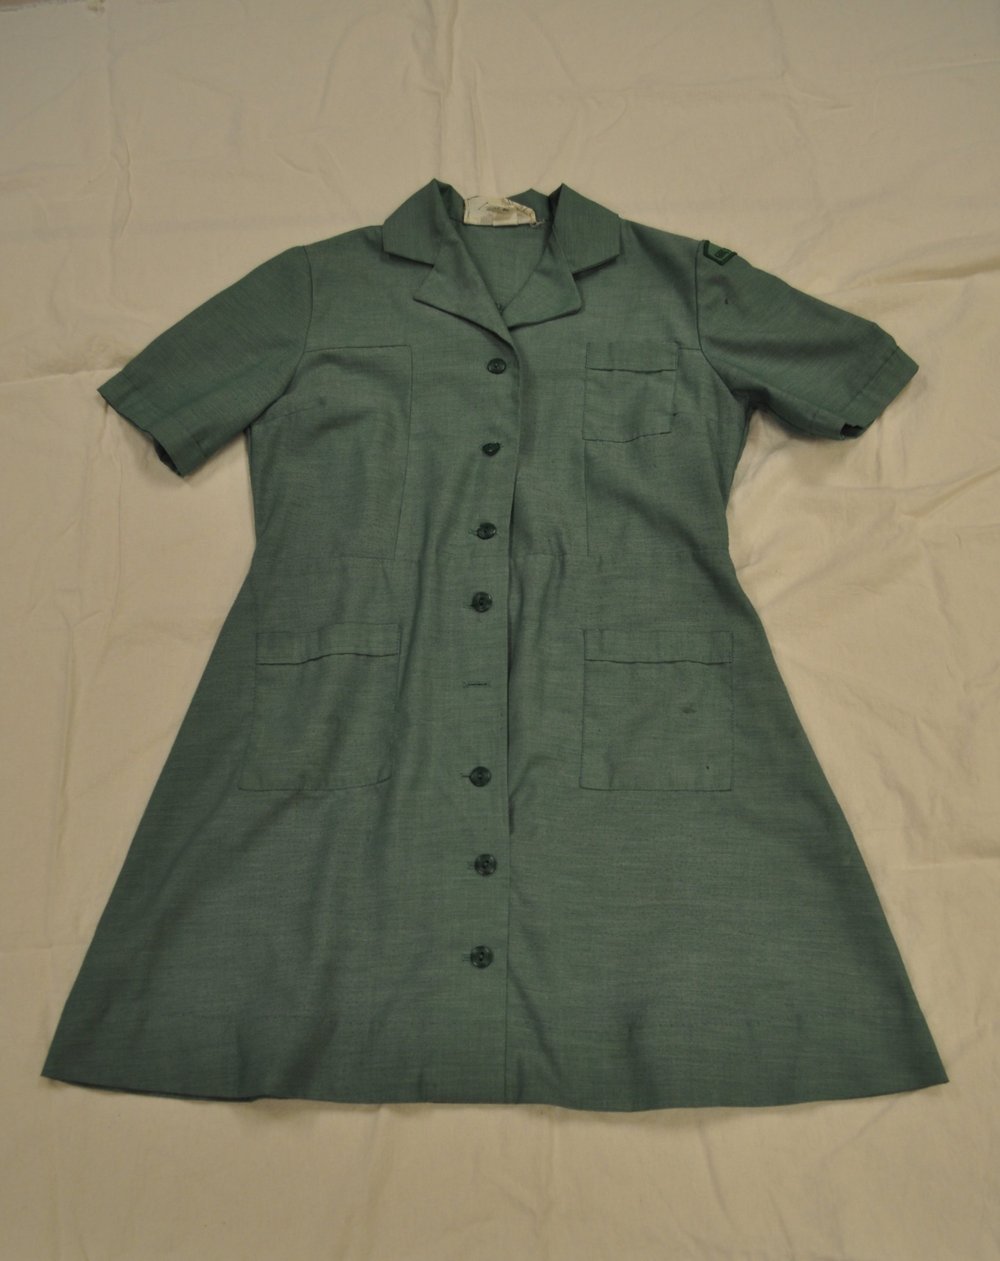 Figure 3: 1962 uniform